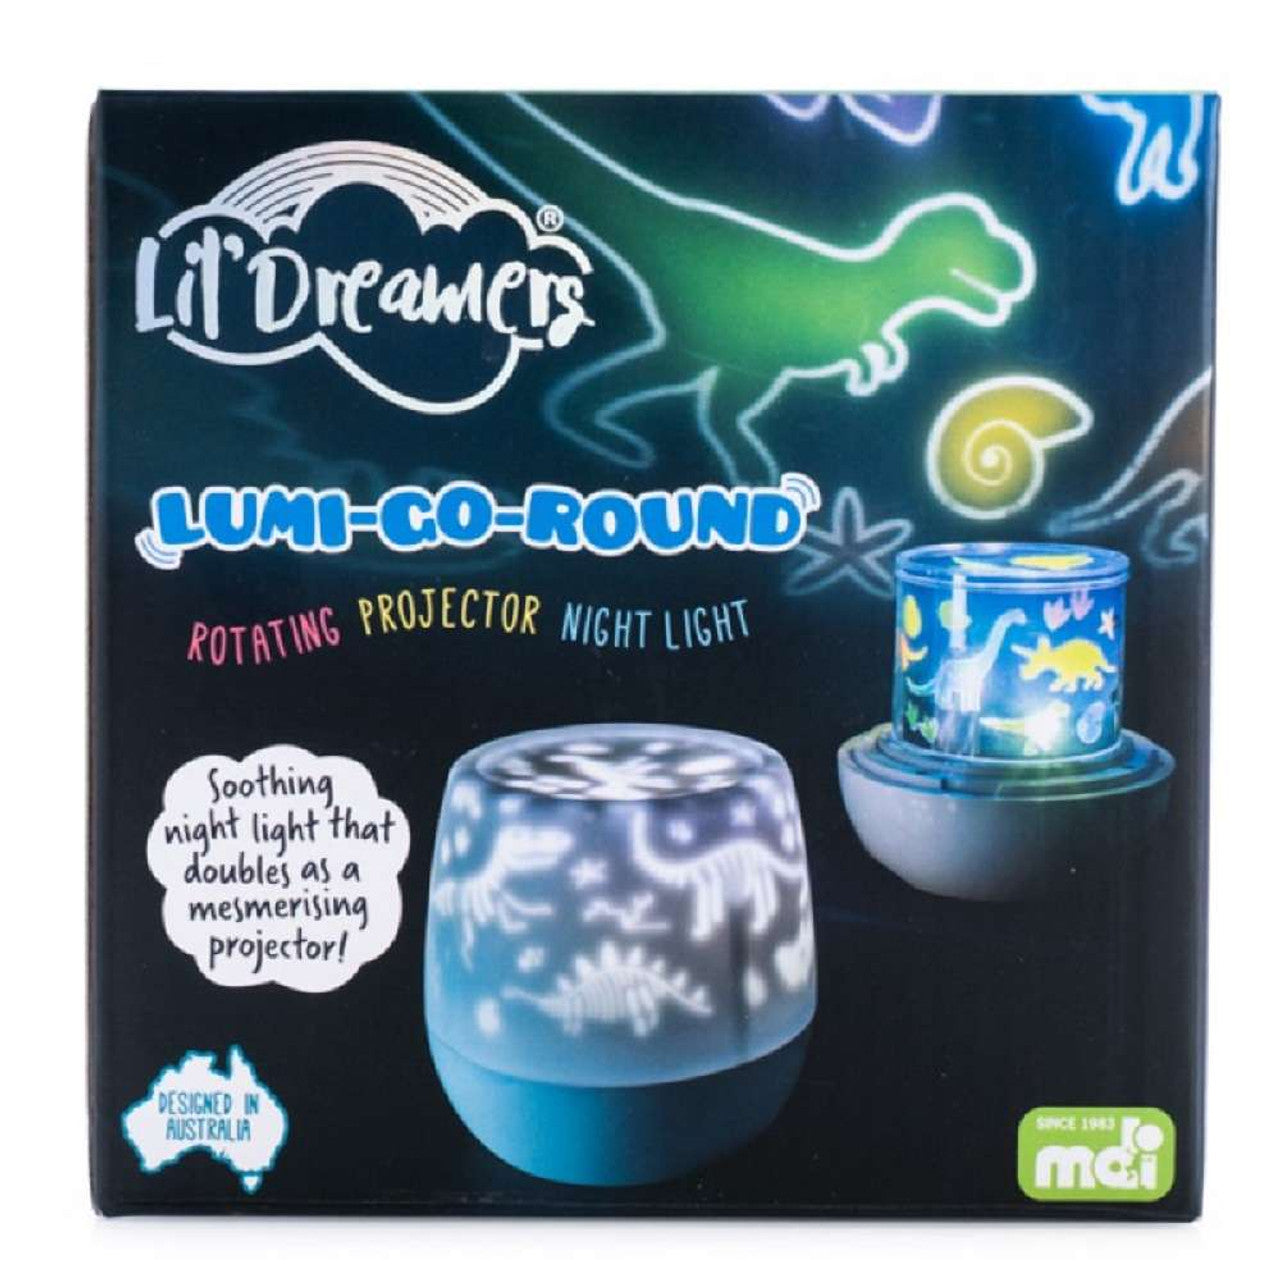 Lil Dreamers Lumi Go Round Rotating LED Projector Night Light Dino USB or req 3 x AA batteries